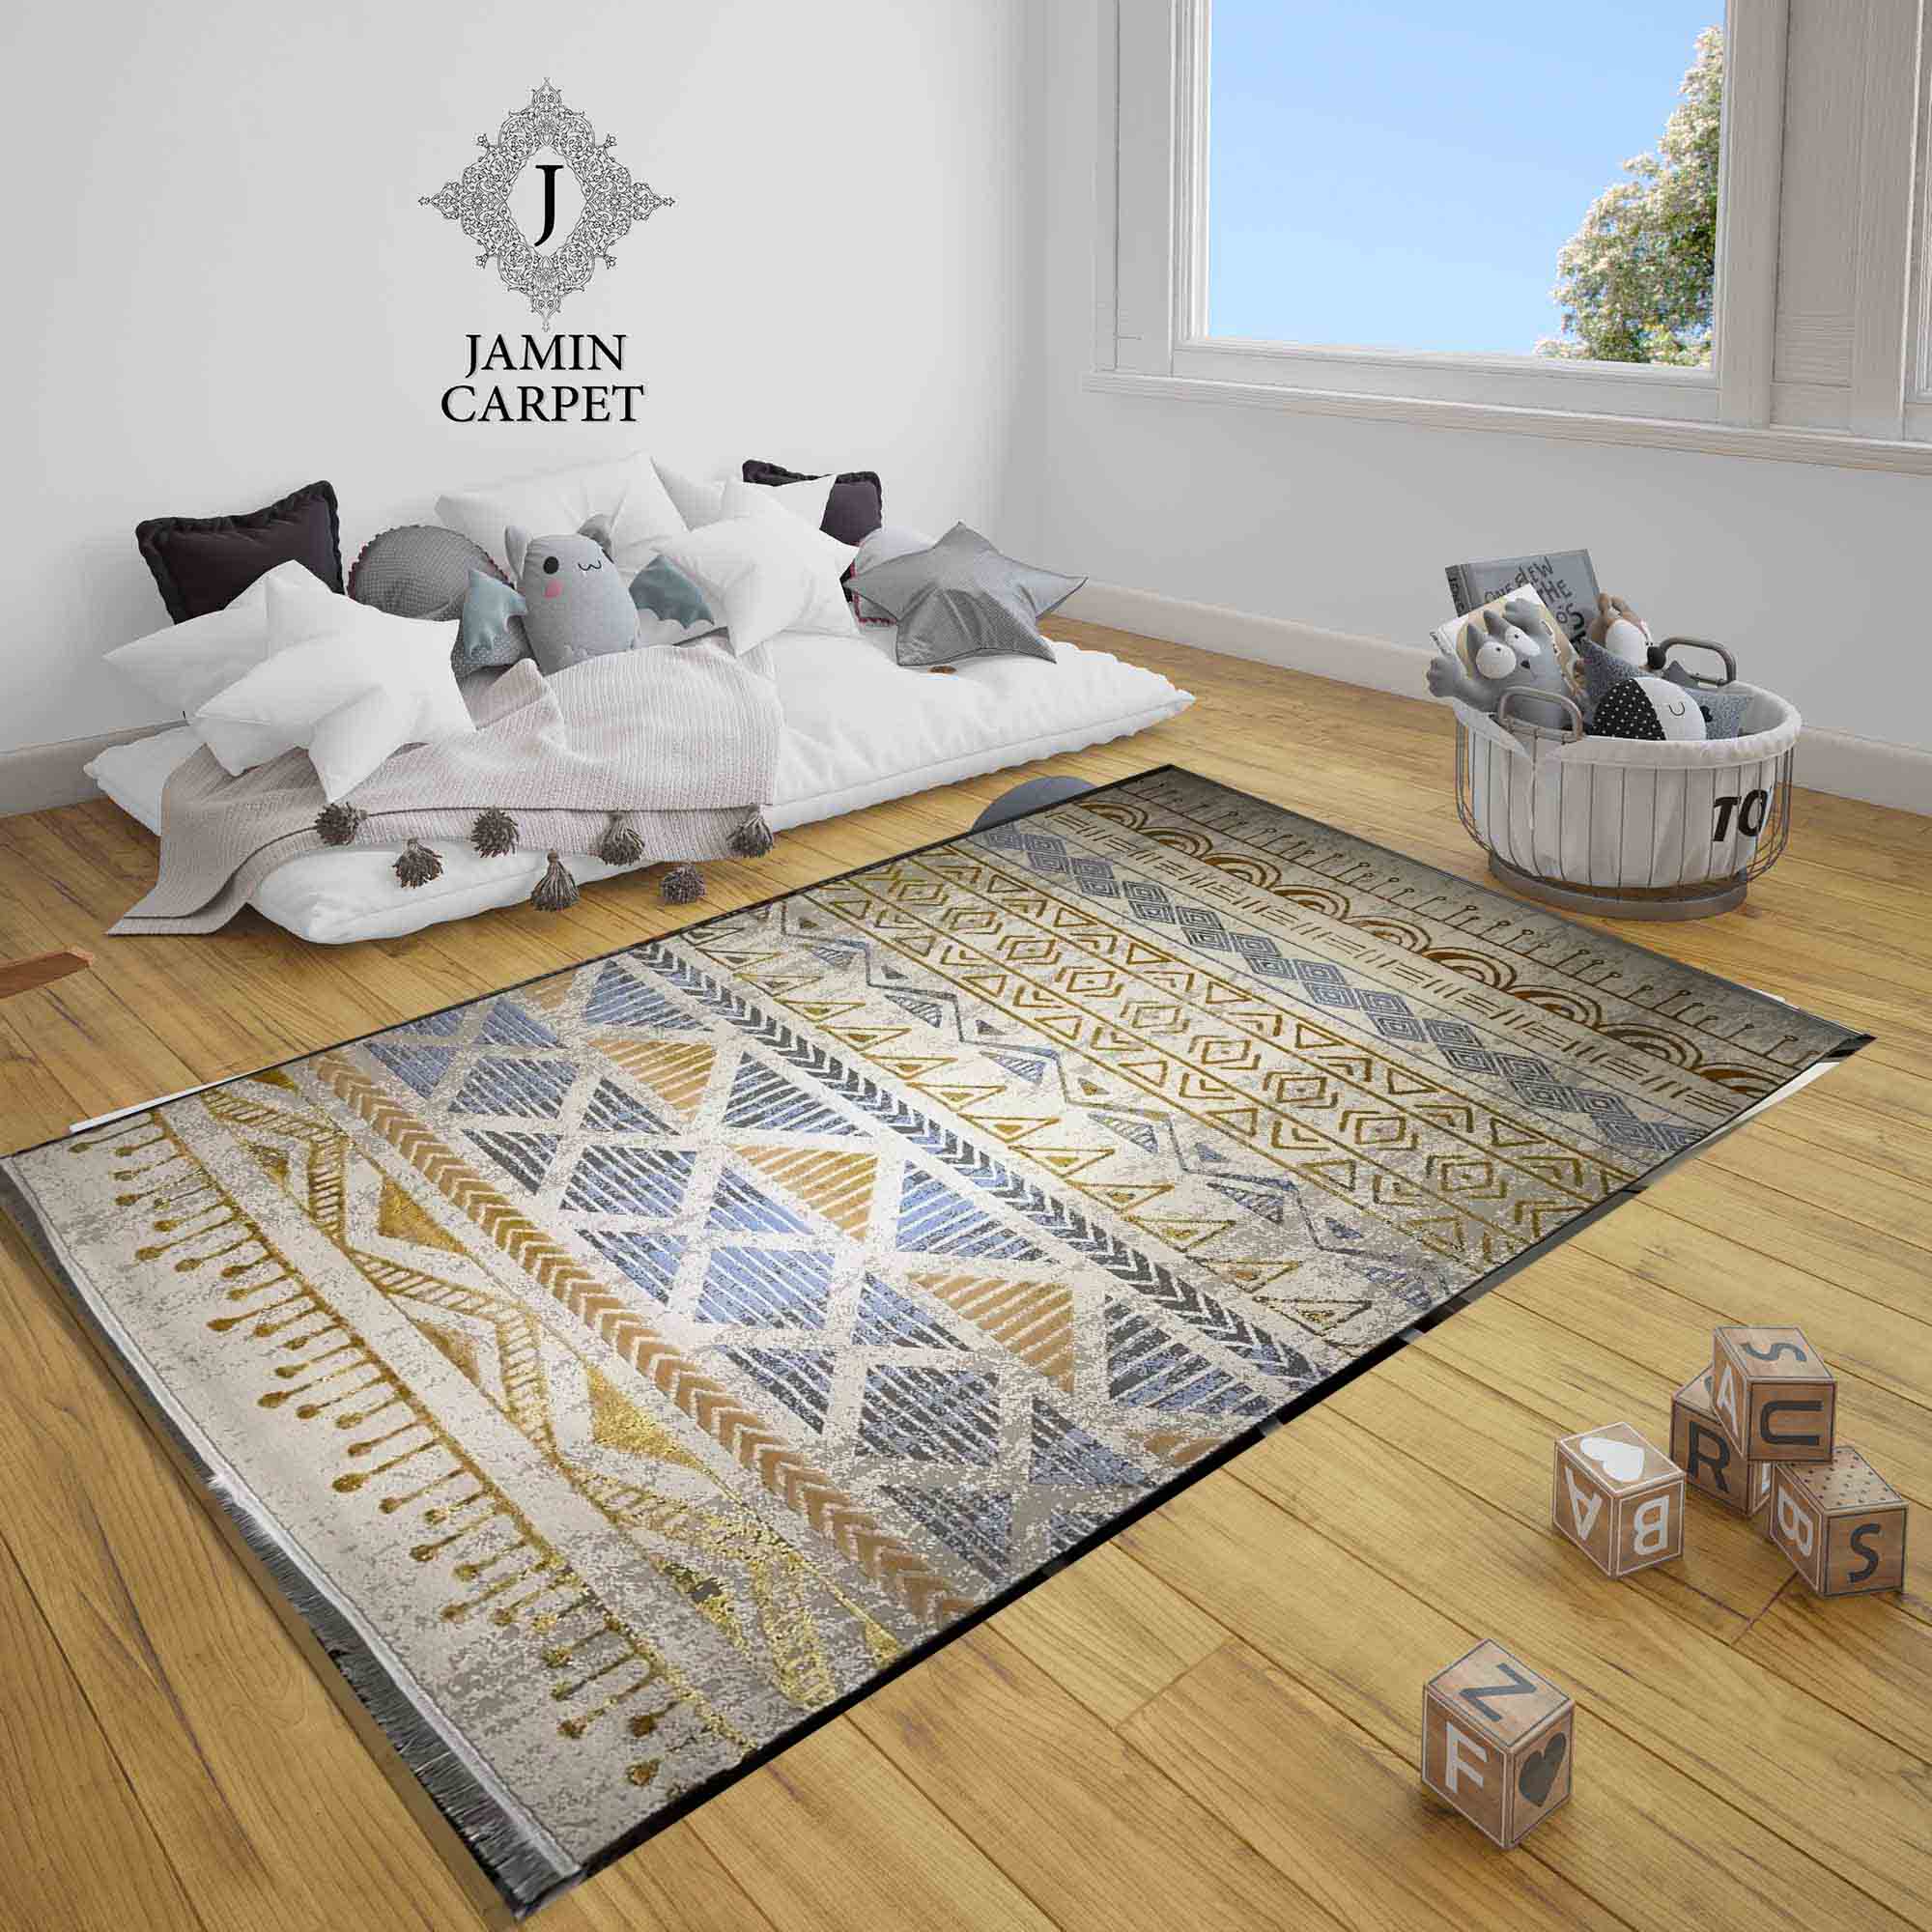 Fantasy carpet code 202 comb 400 density 1800 all acrylic